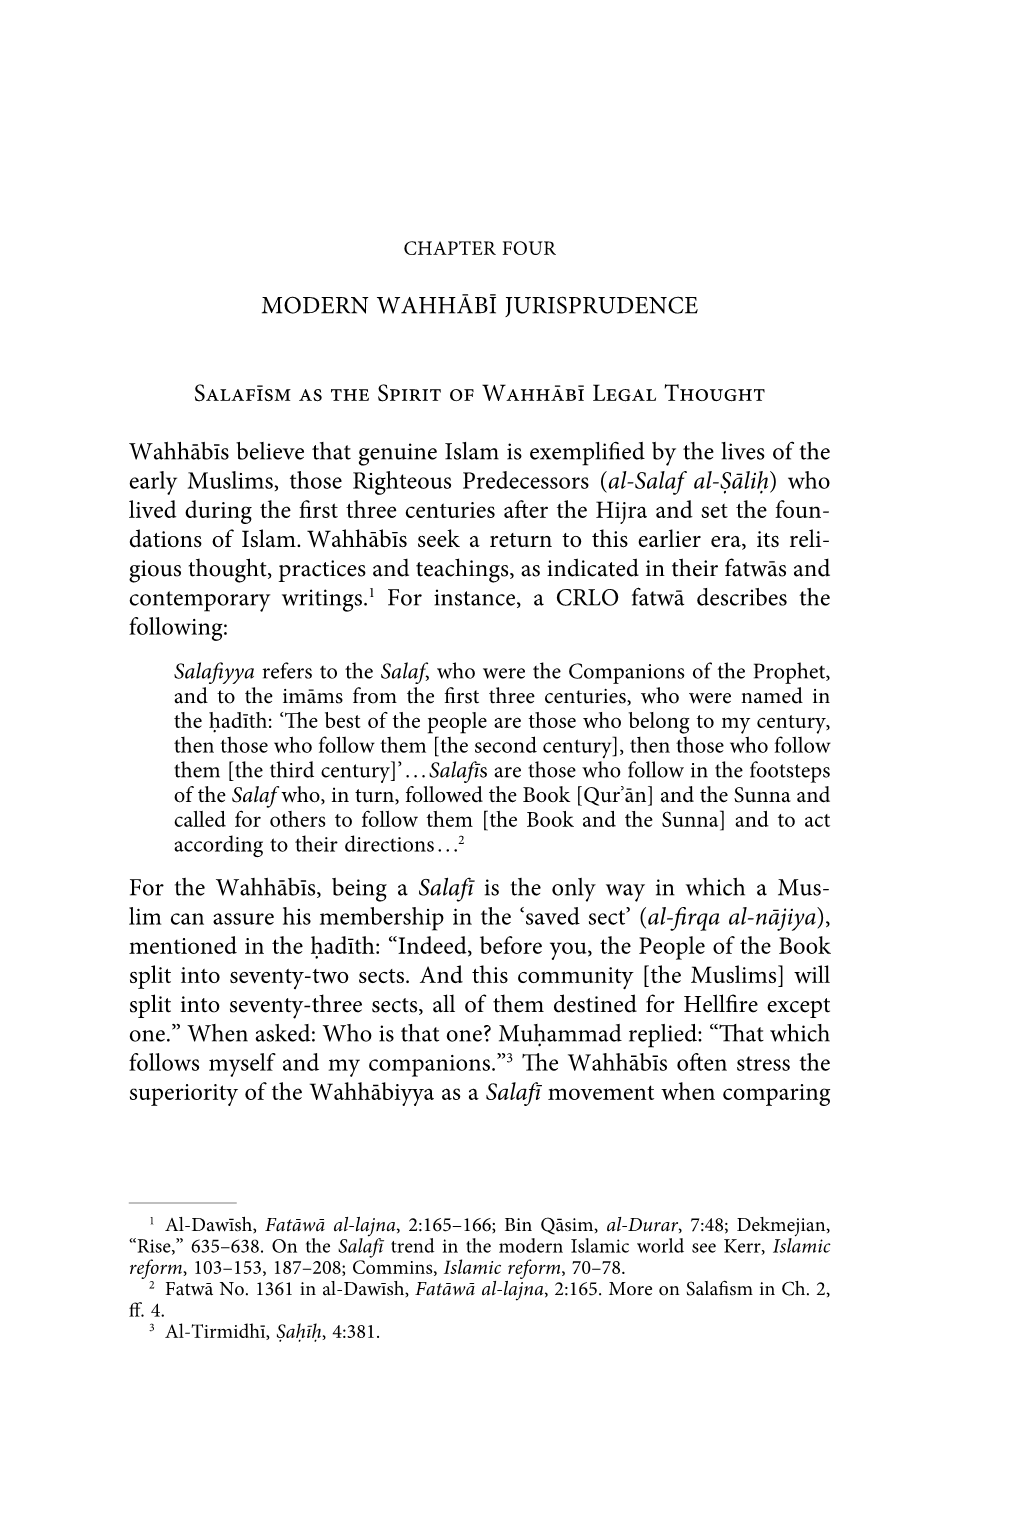 Modern Wahhābī Jurisprudence